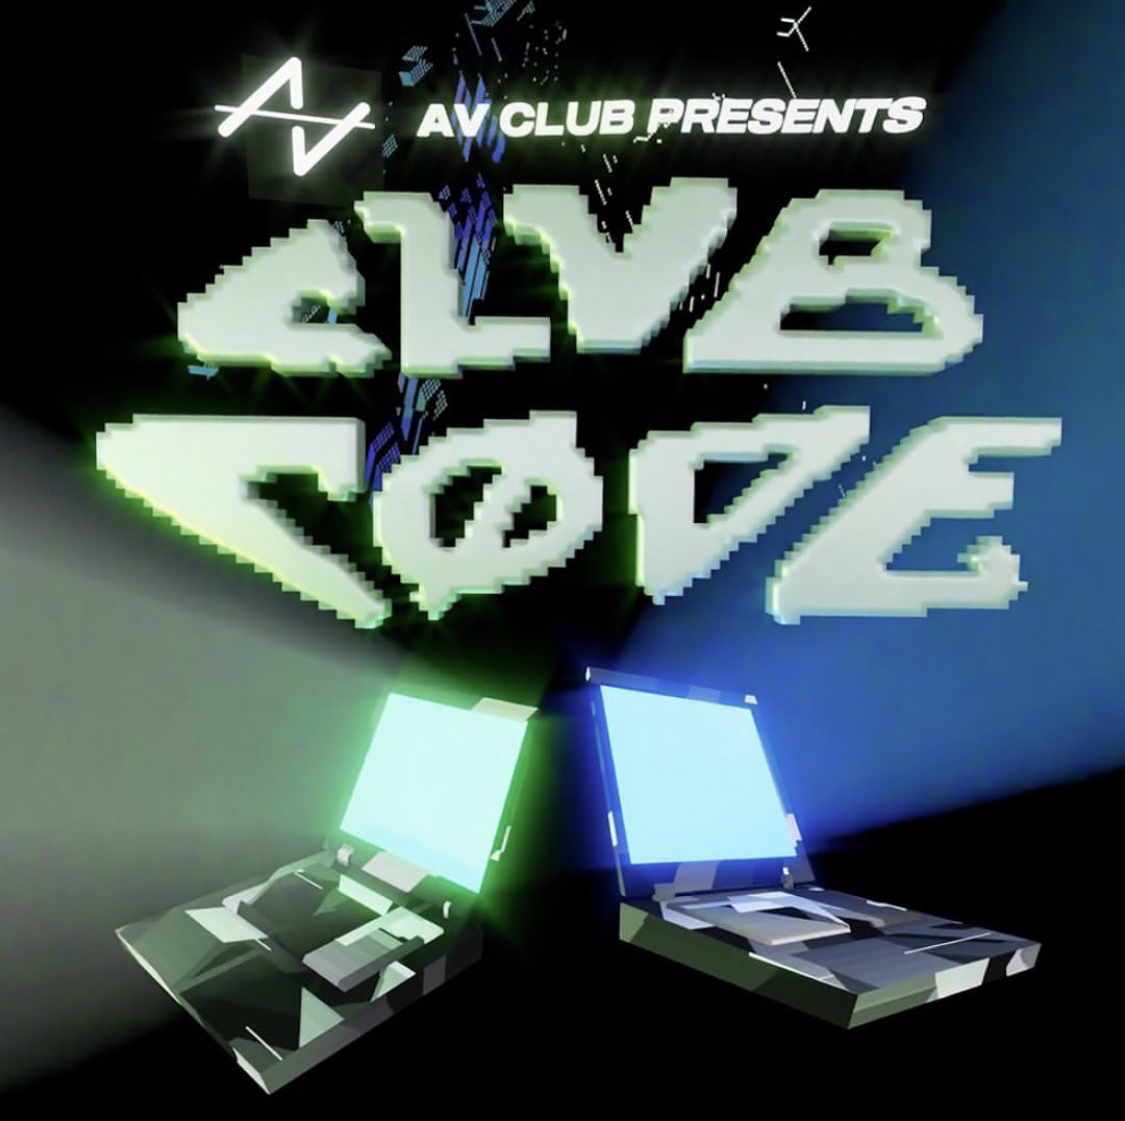 AV Club presents:  Club Code